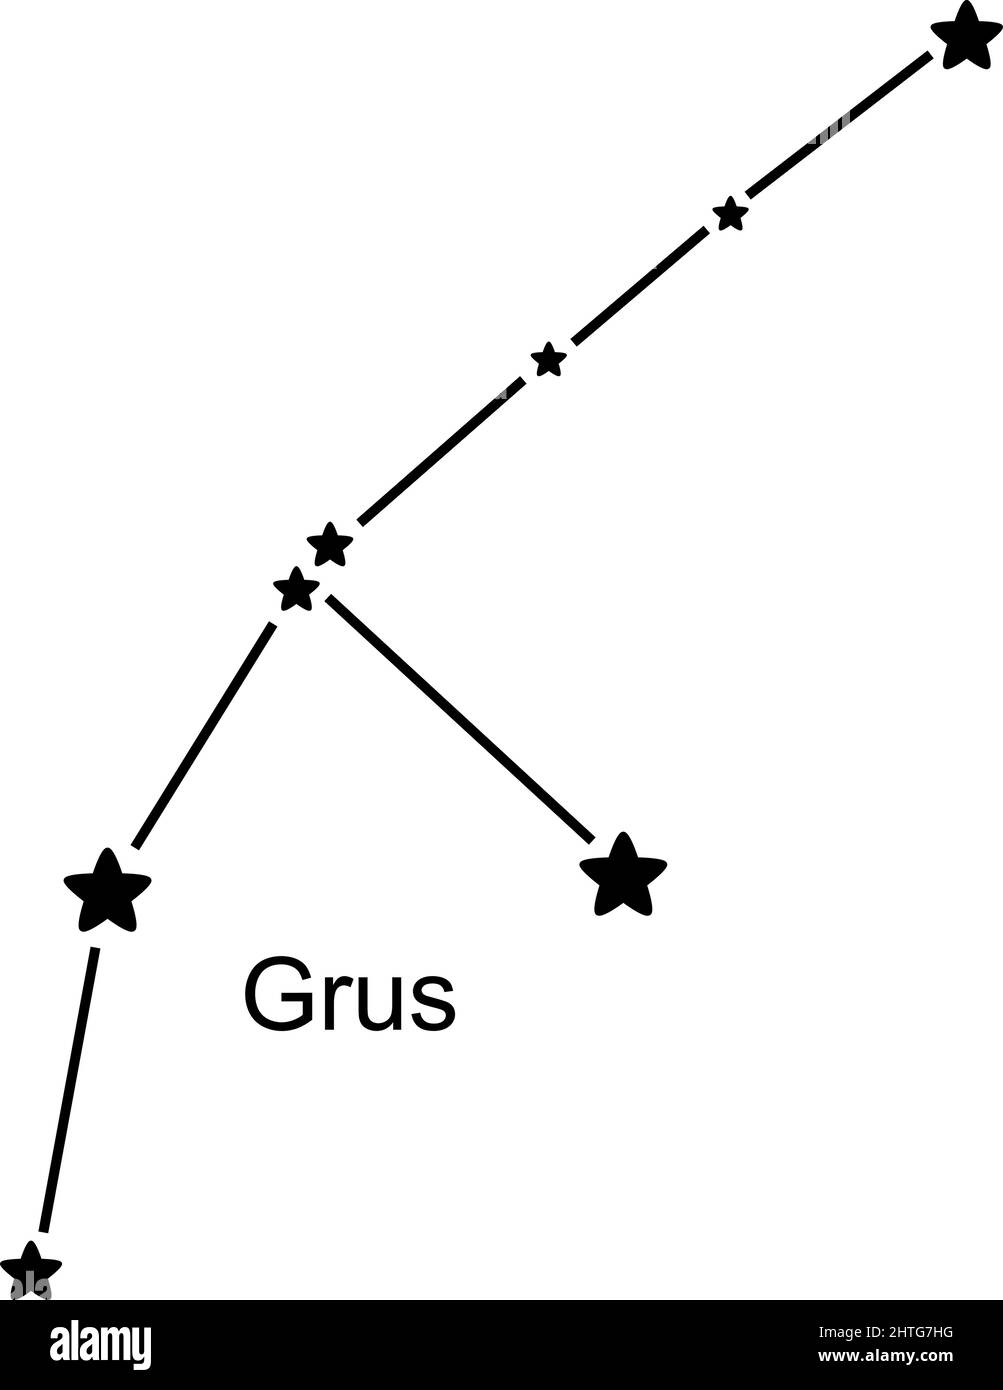 Constellation Grus on white background, vector illustration Stock Vector